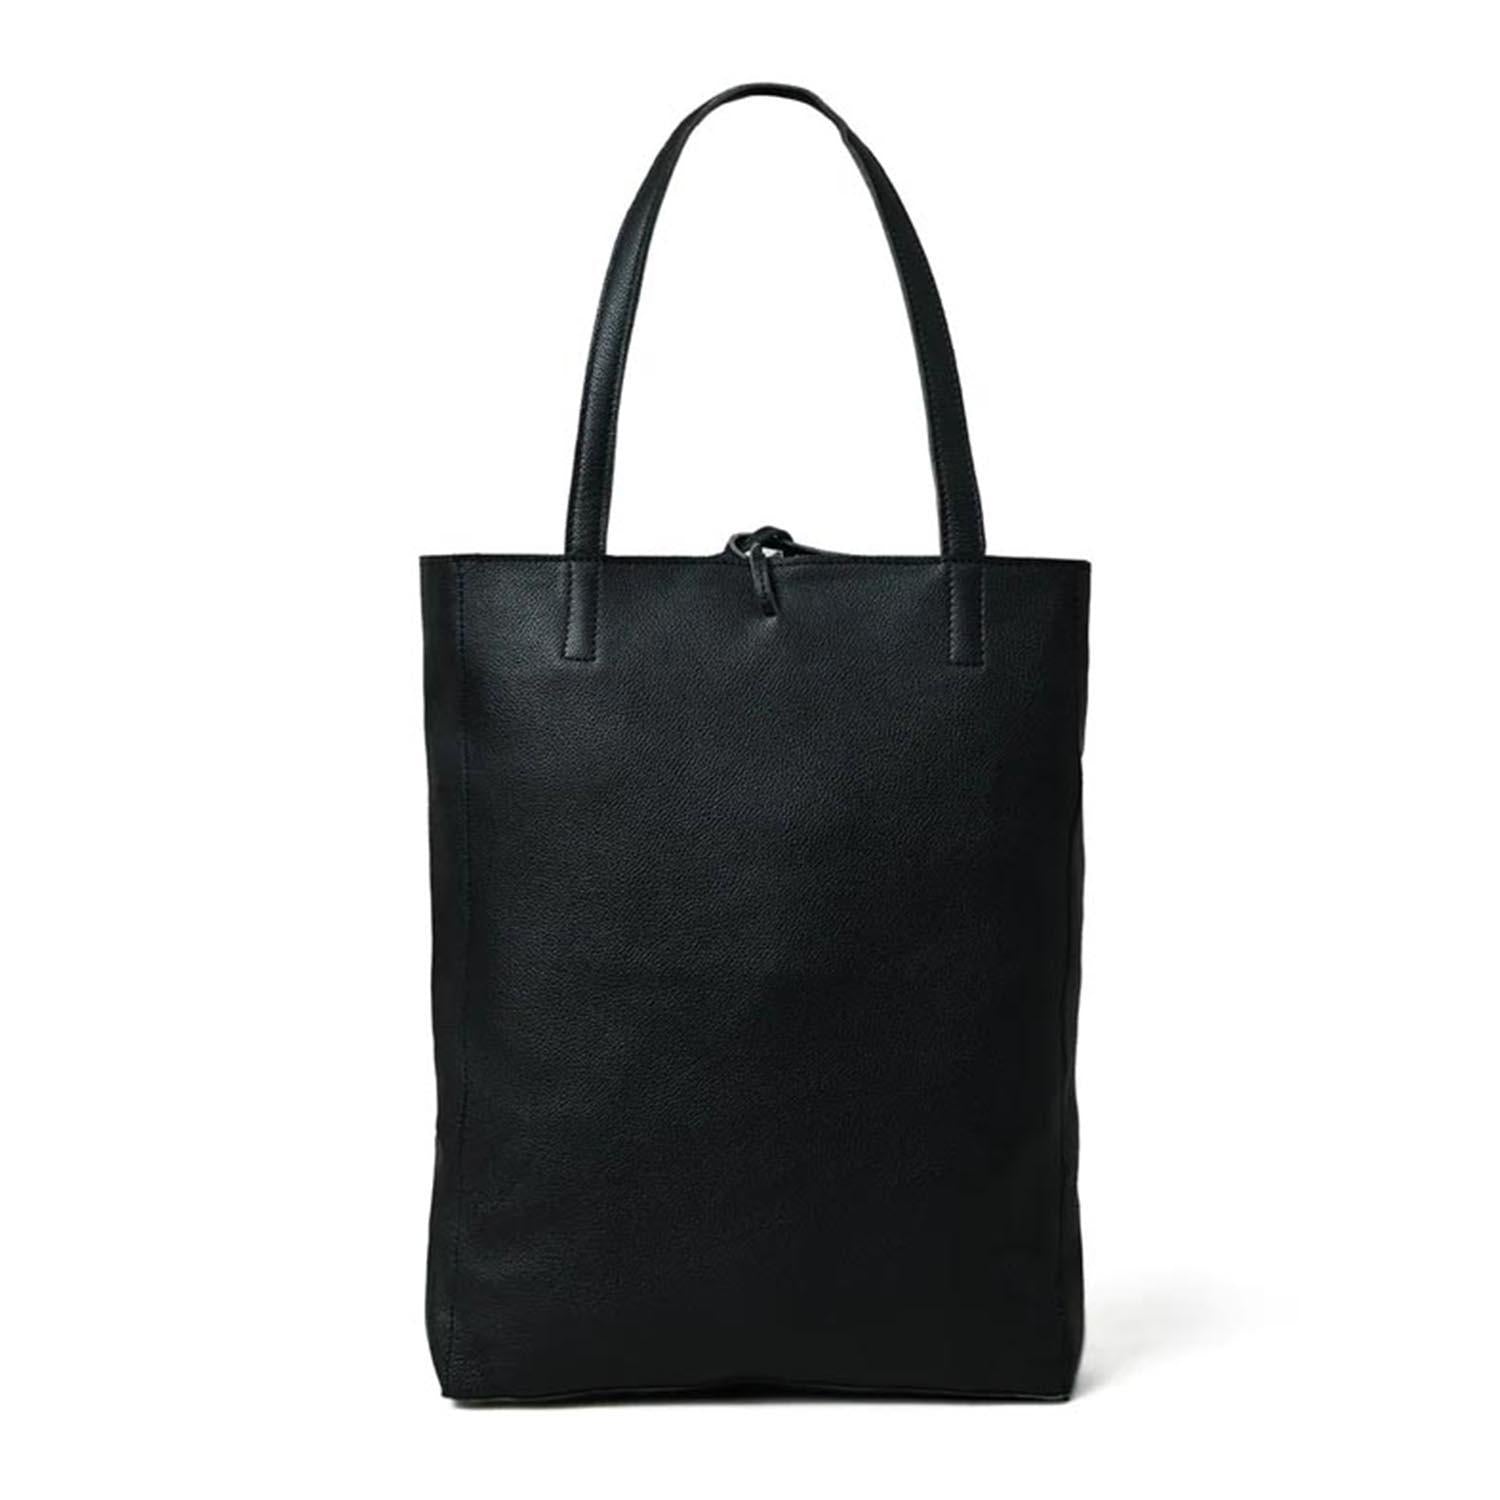 Sydney Black Shopper Women's Leather Tote Bag